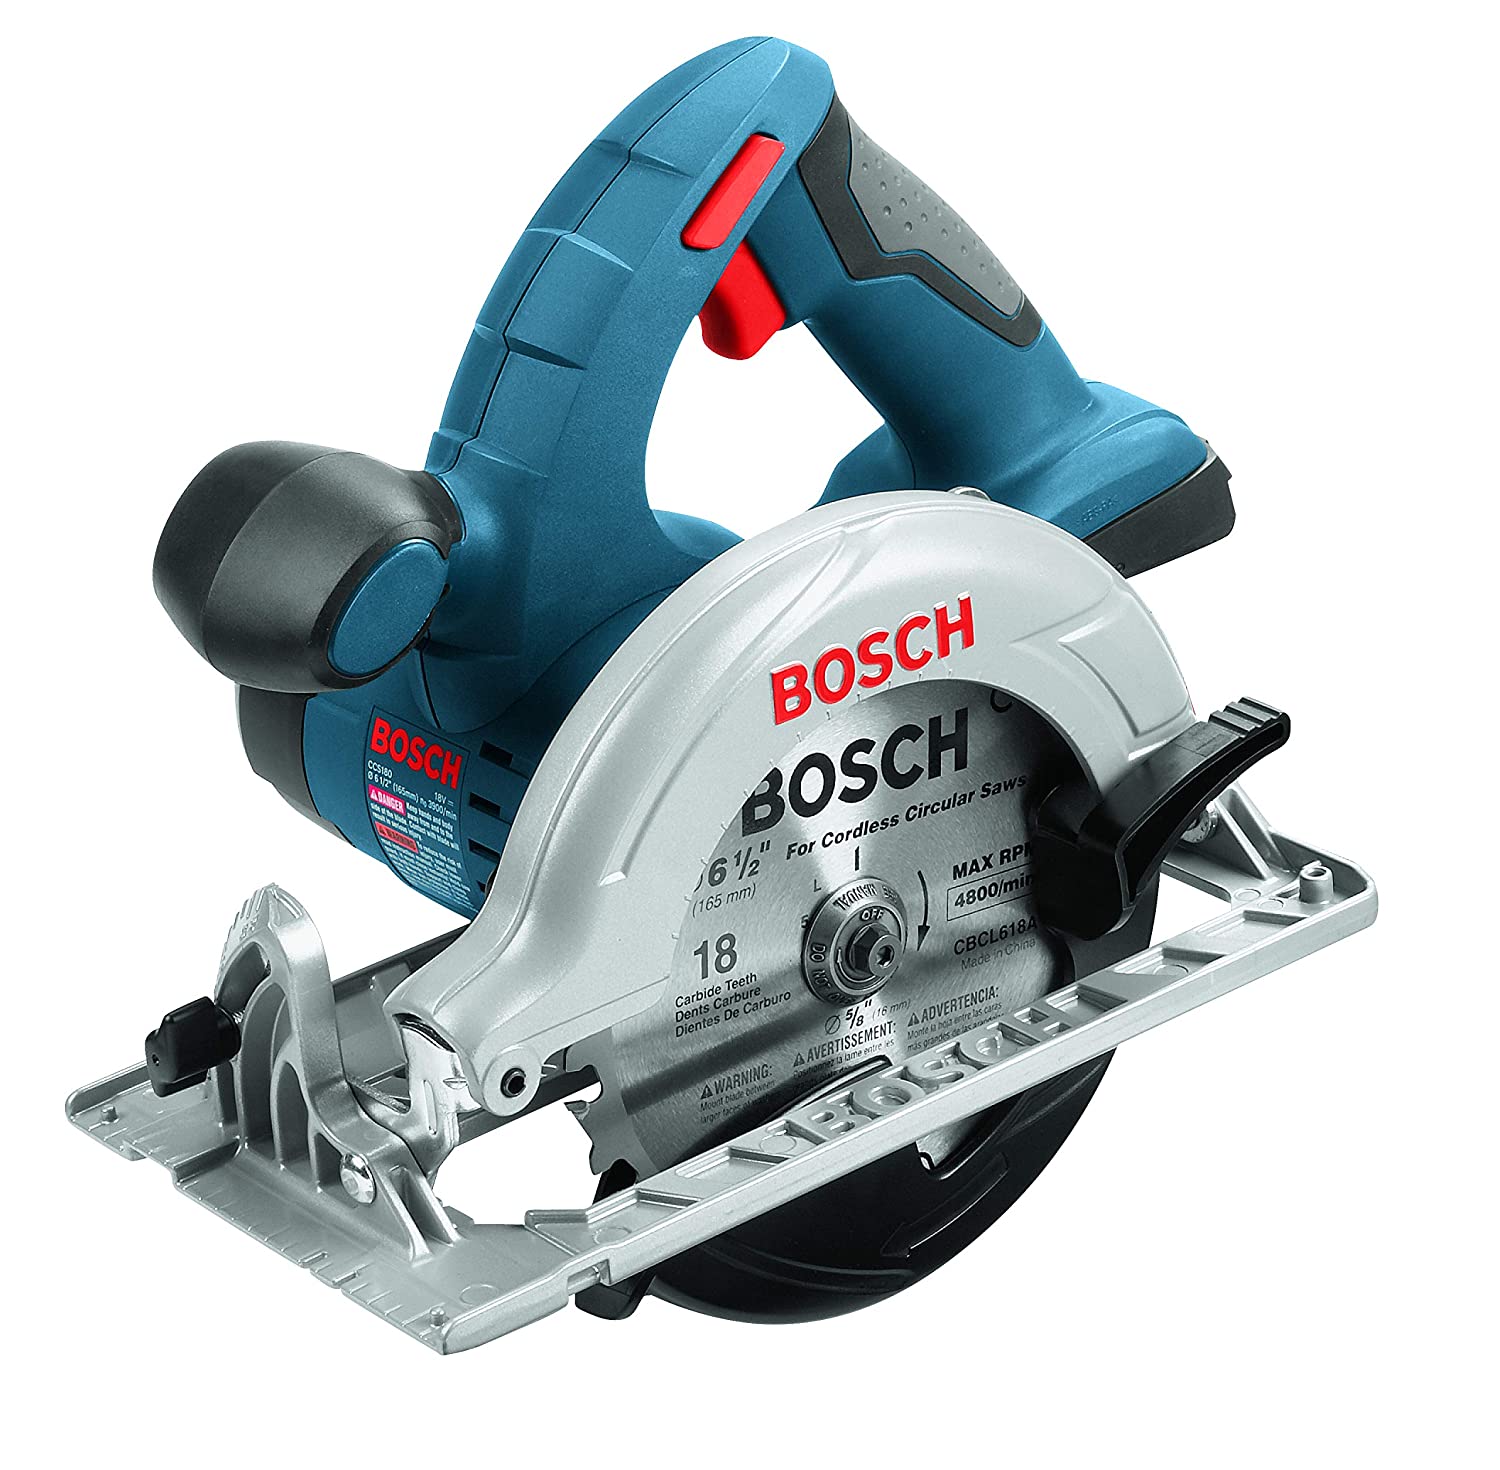 Bosch Saws Category